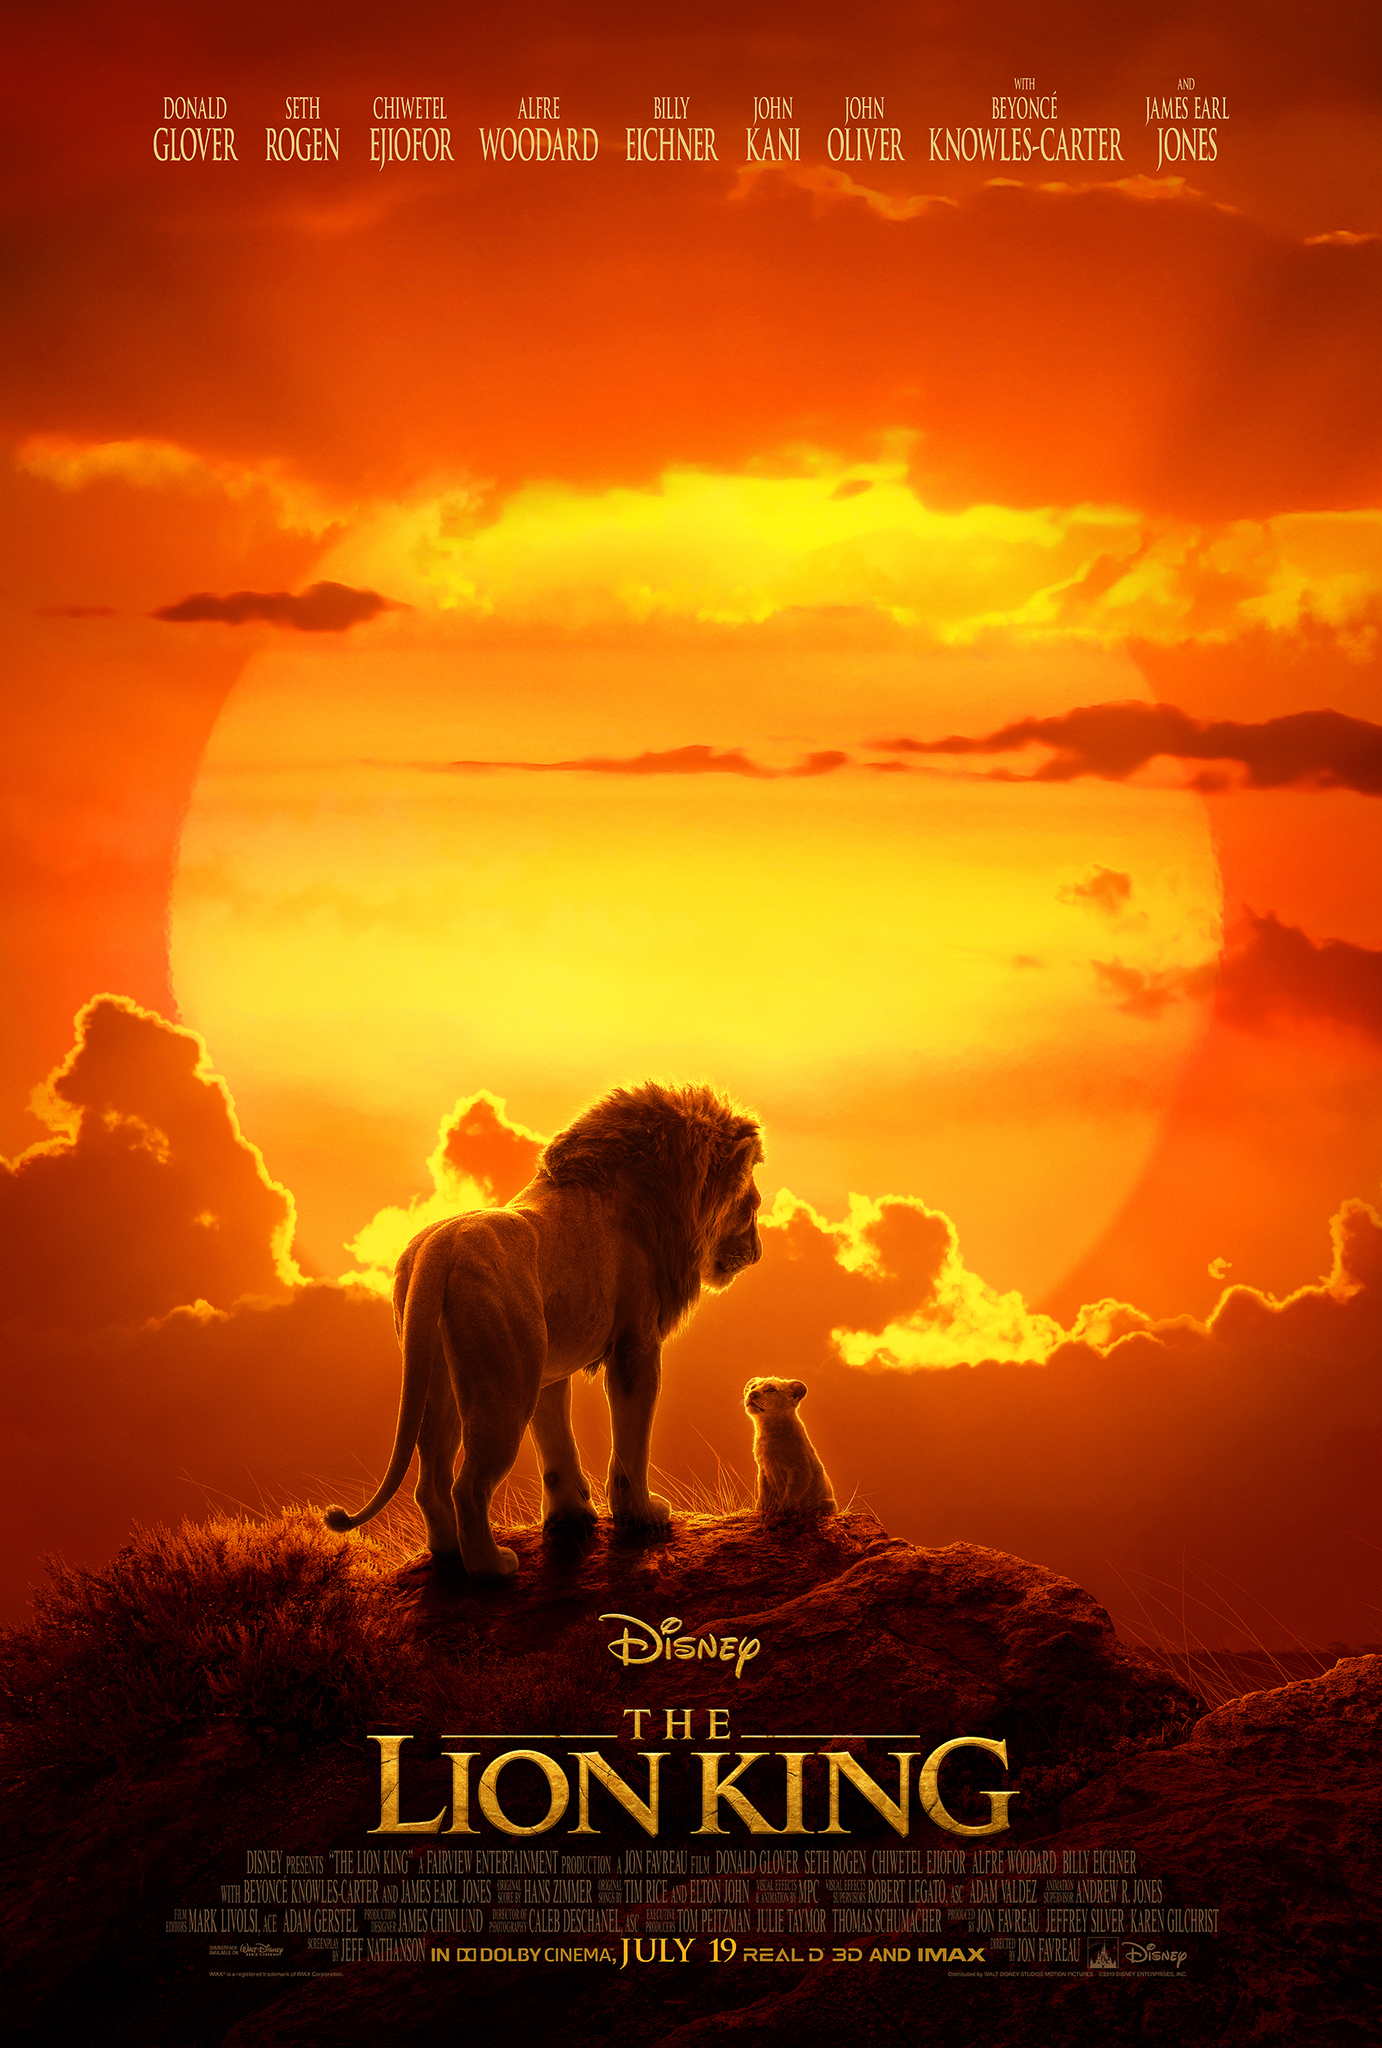 Mufasa v6 24x36 The Lion King 2019 Movie Poster - James Earl Jones